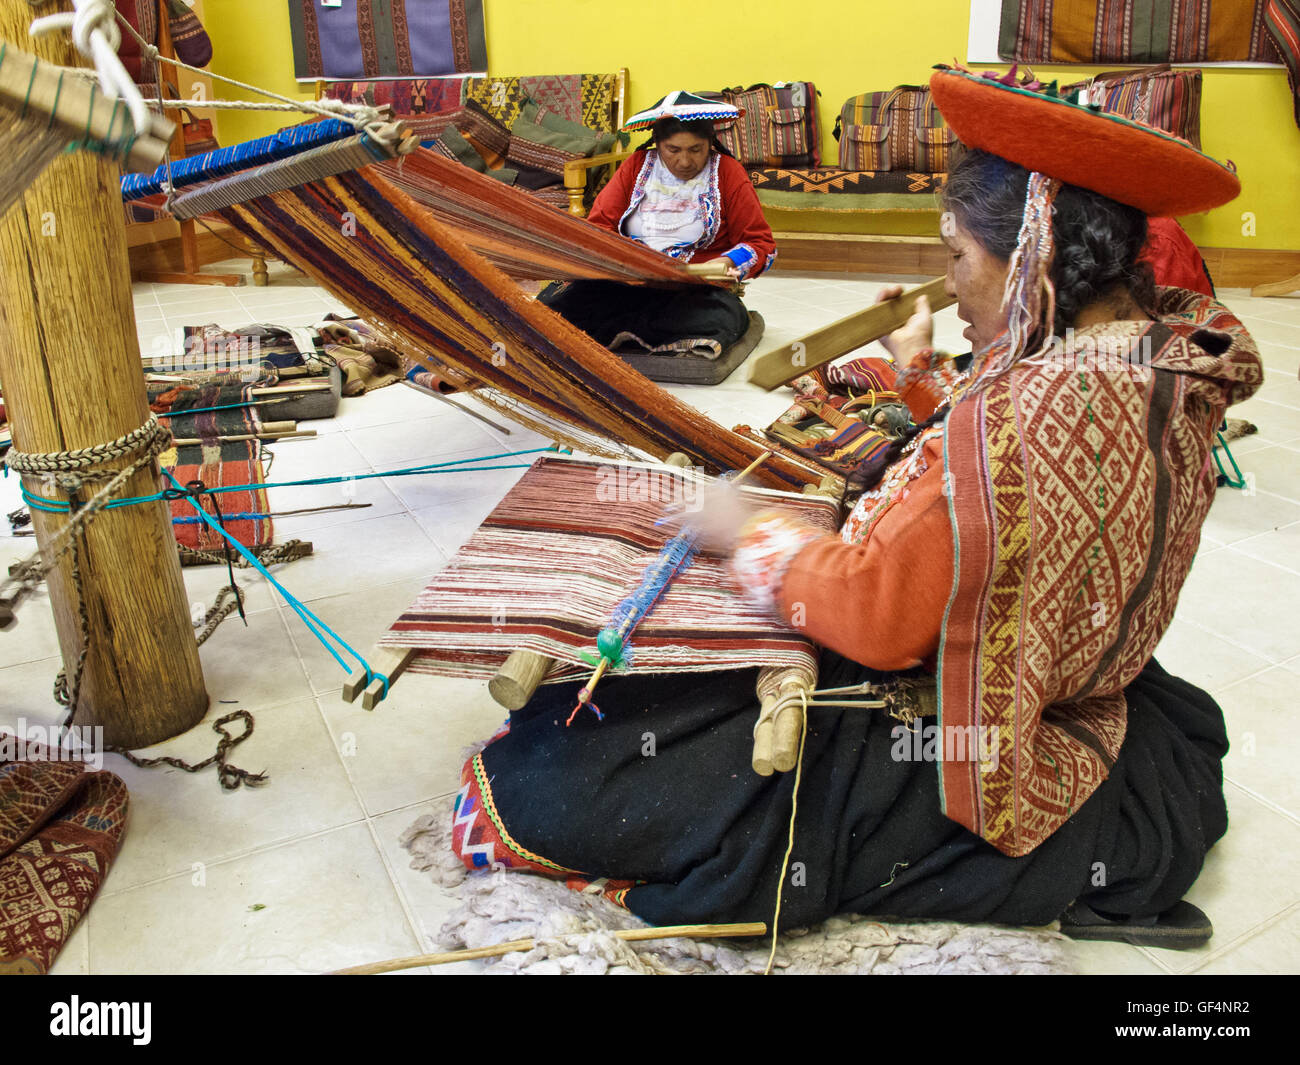 Local Peruvian ladies demonstrating the traditional weaving method Stock Photo